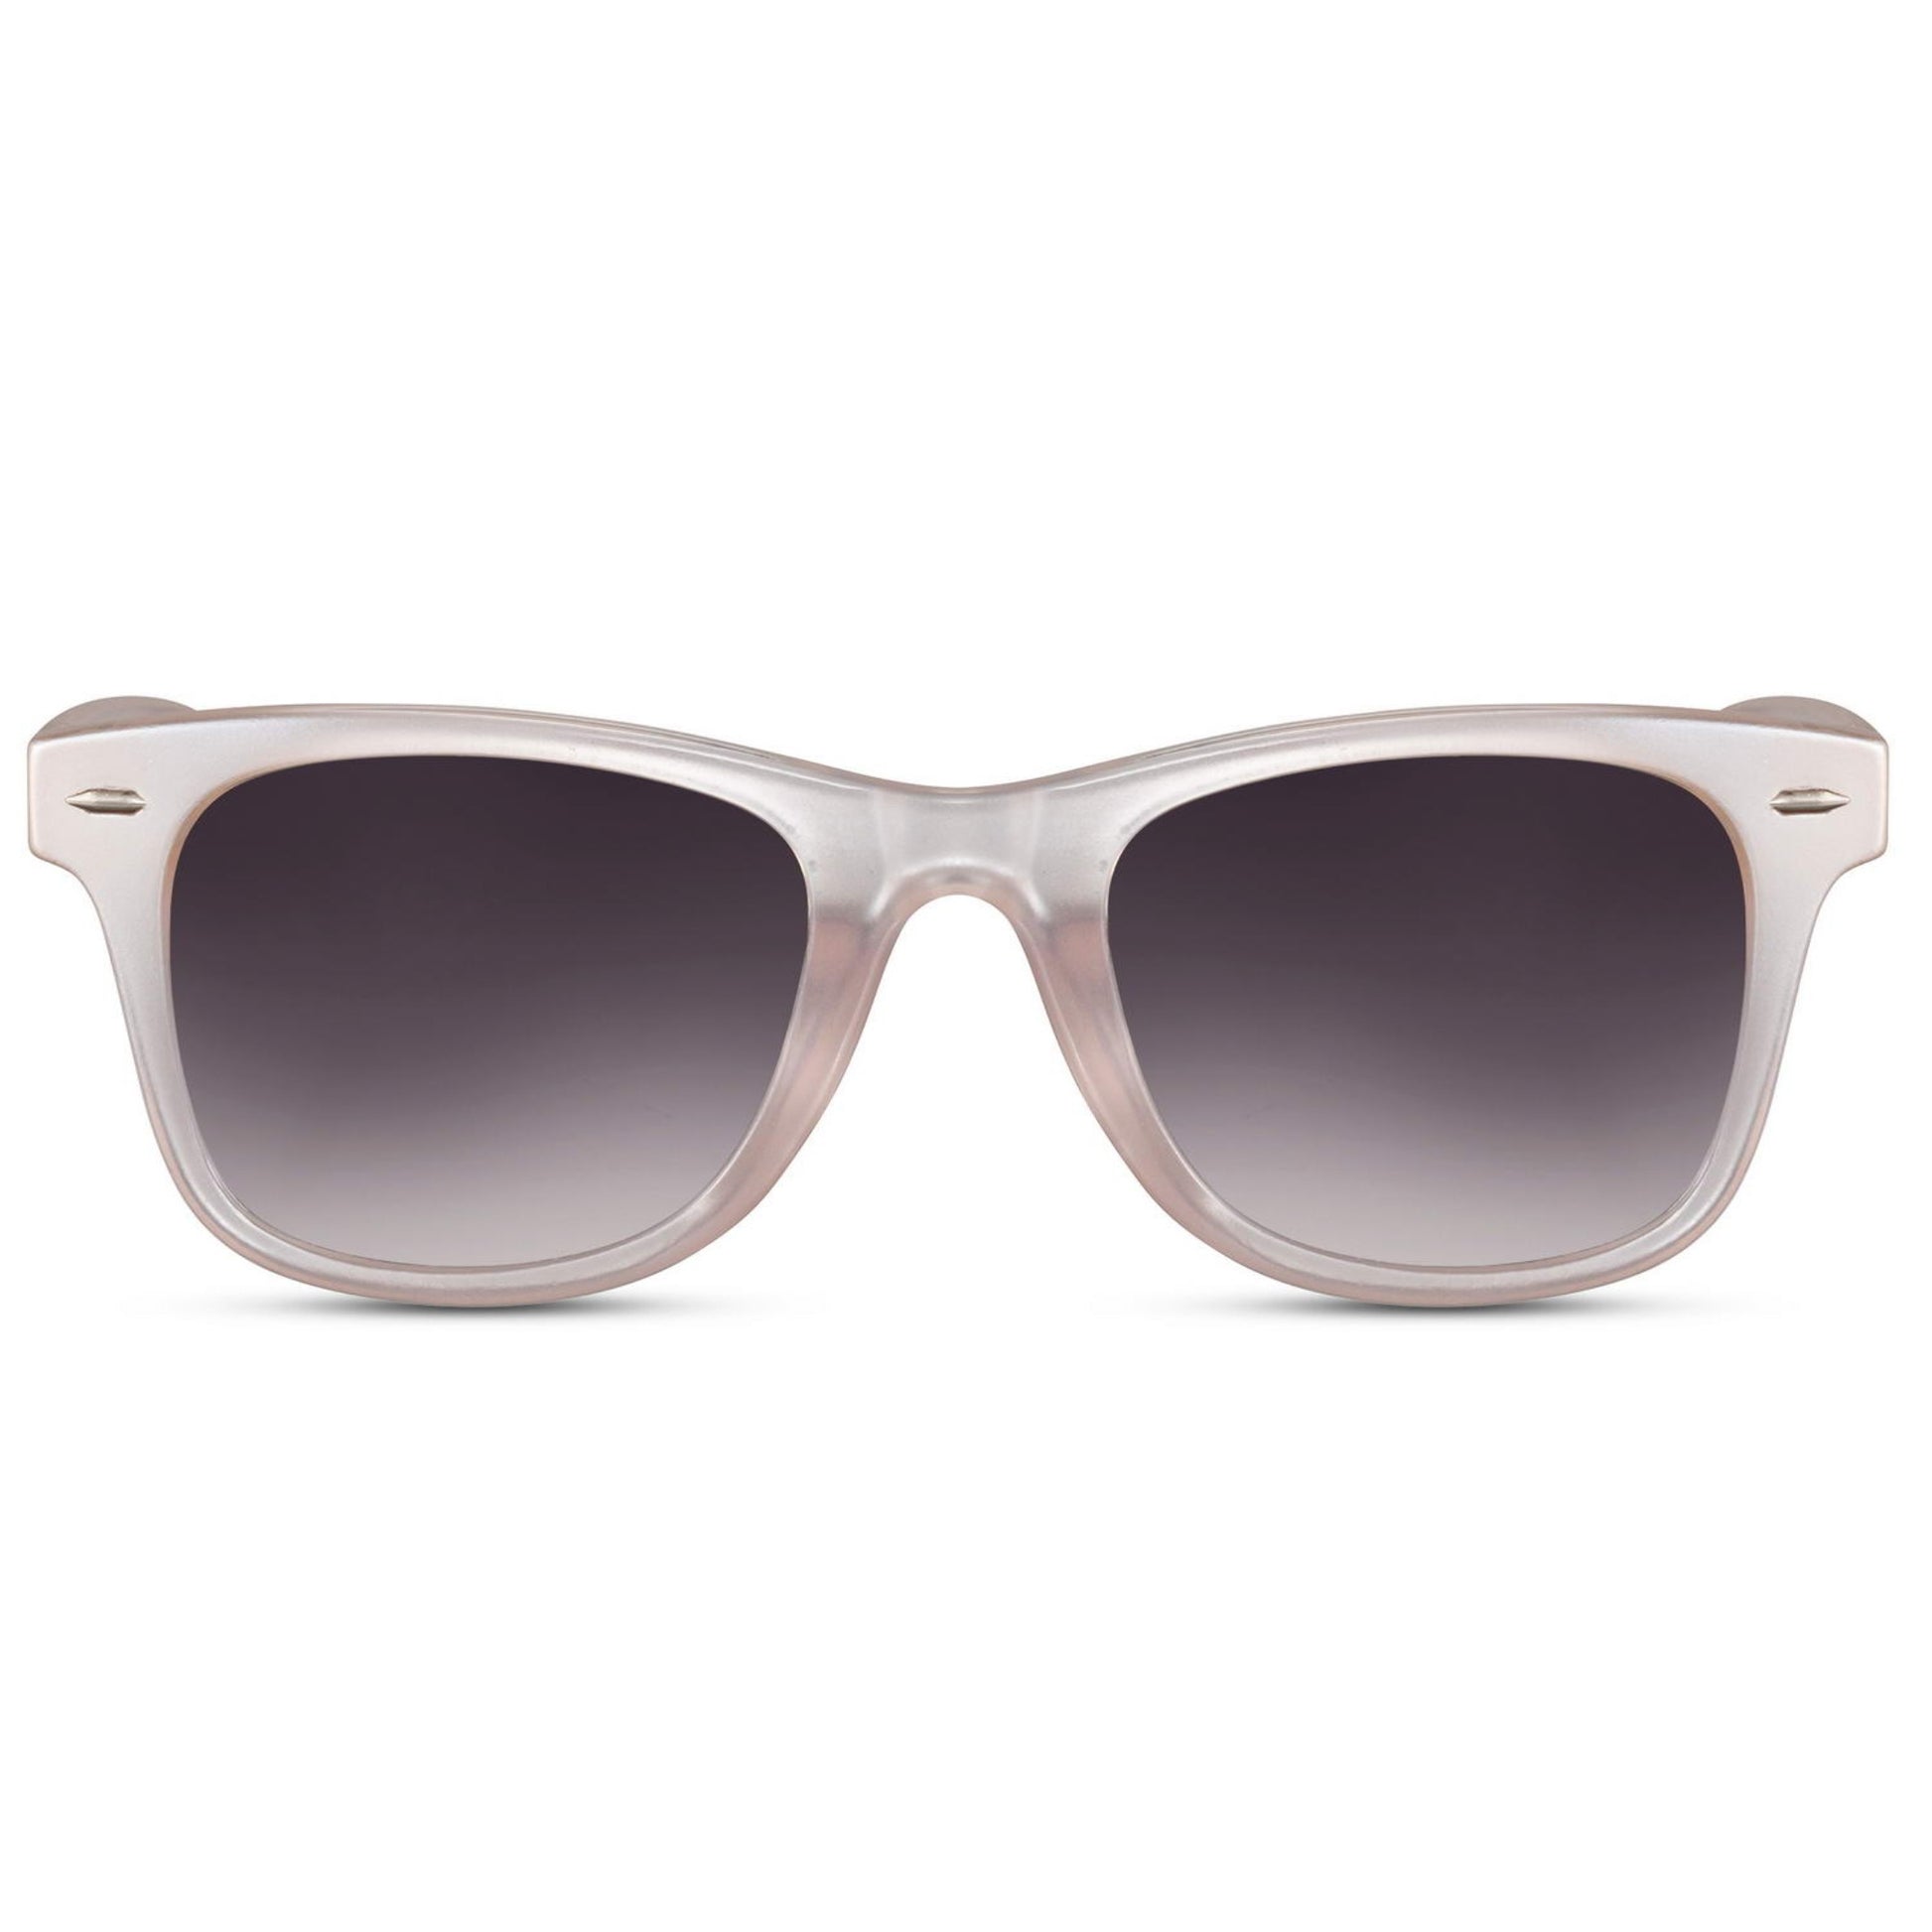 Nevada - Sunglasses - Exposure Sunglasses - NDL6185